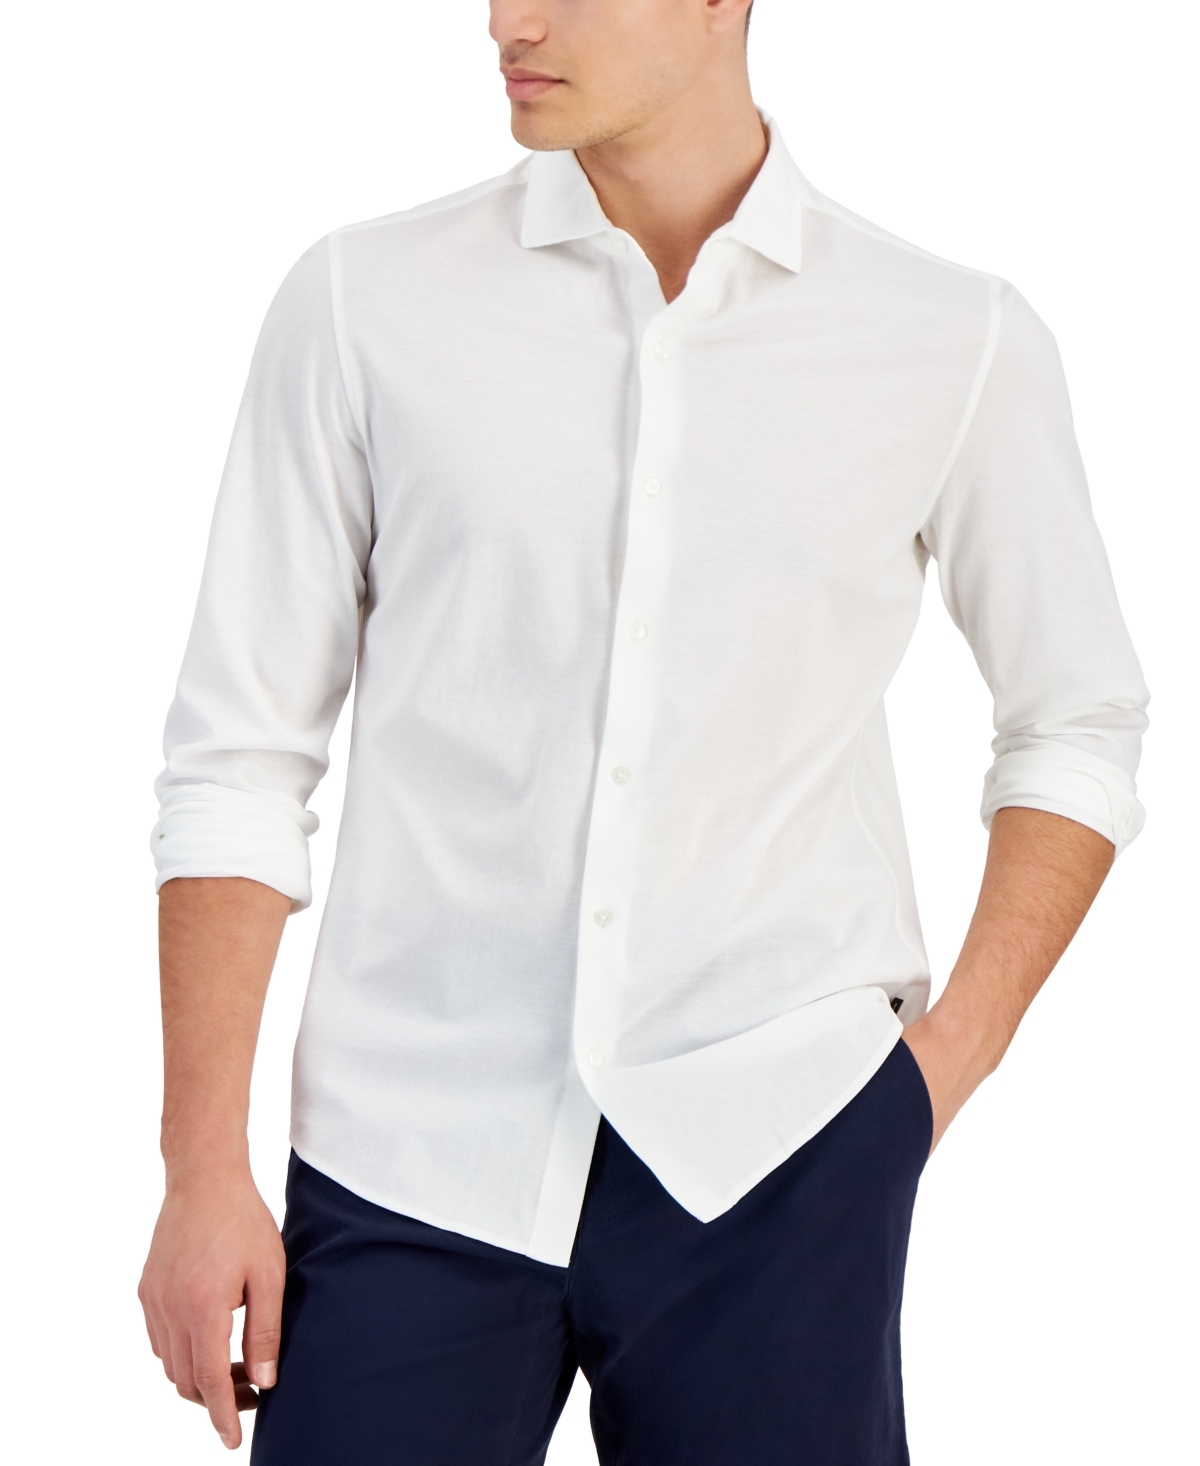 Men's Slim-Fit Stretch Pique Button-Down Shirt - White